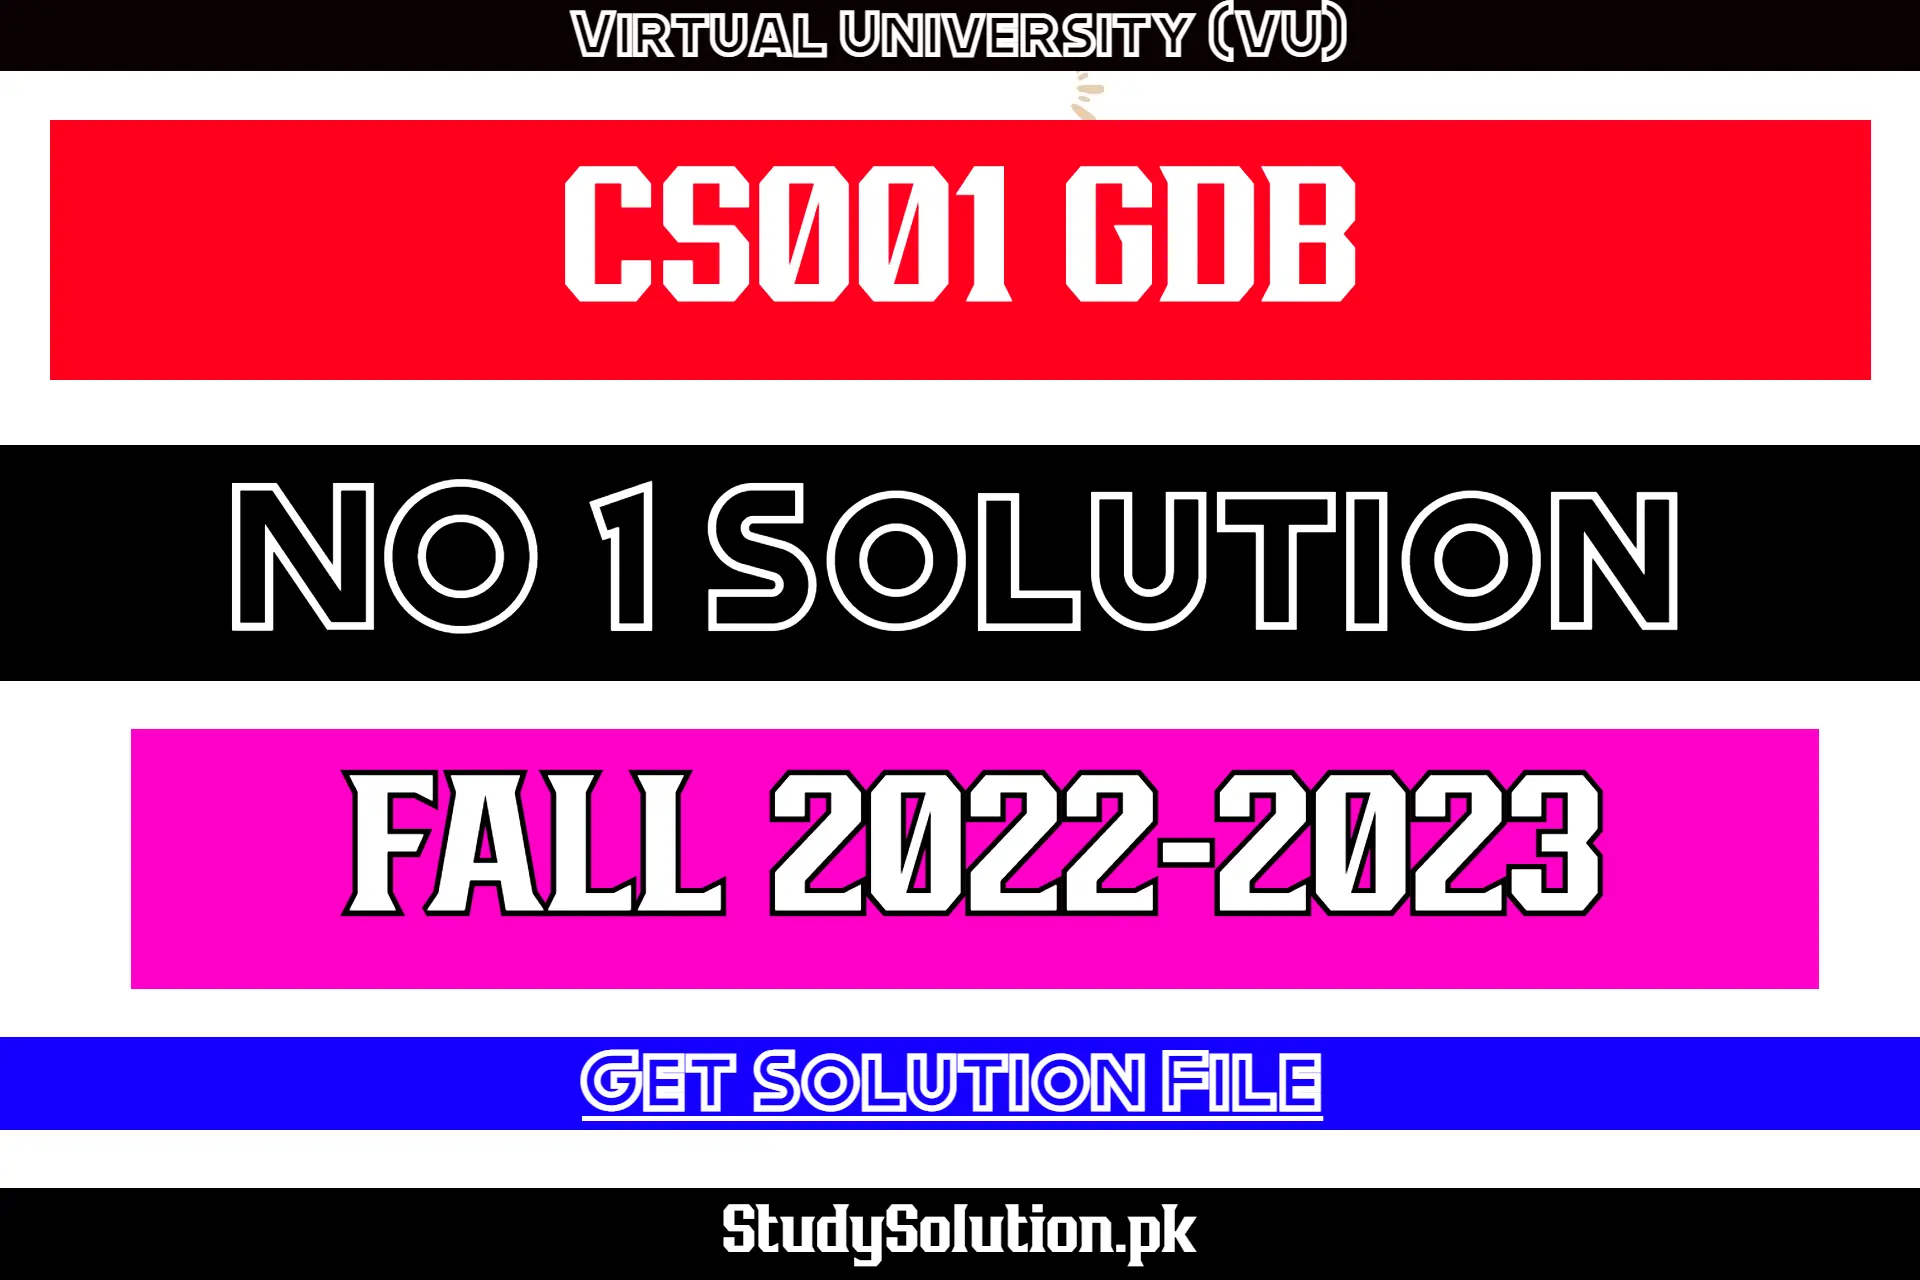 CS001 GDB No 1 Solution Fall 2022